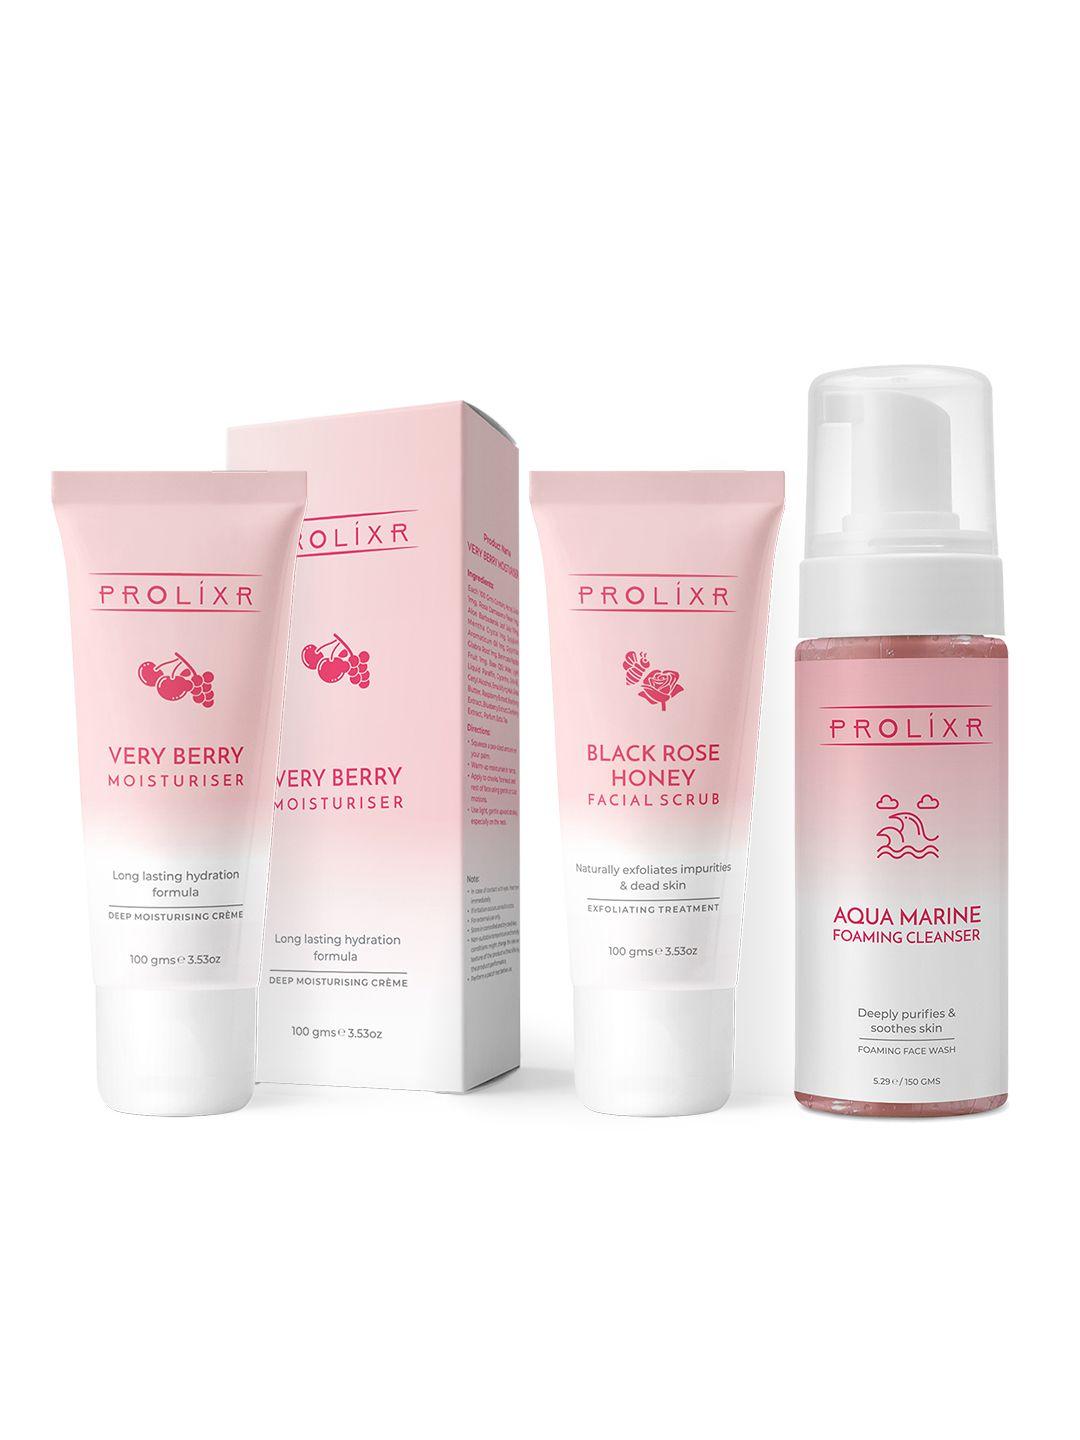 prolixr intense cleanse bundle - rejuvenates and detoxifies skin for all skin types-350ml